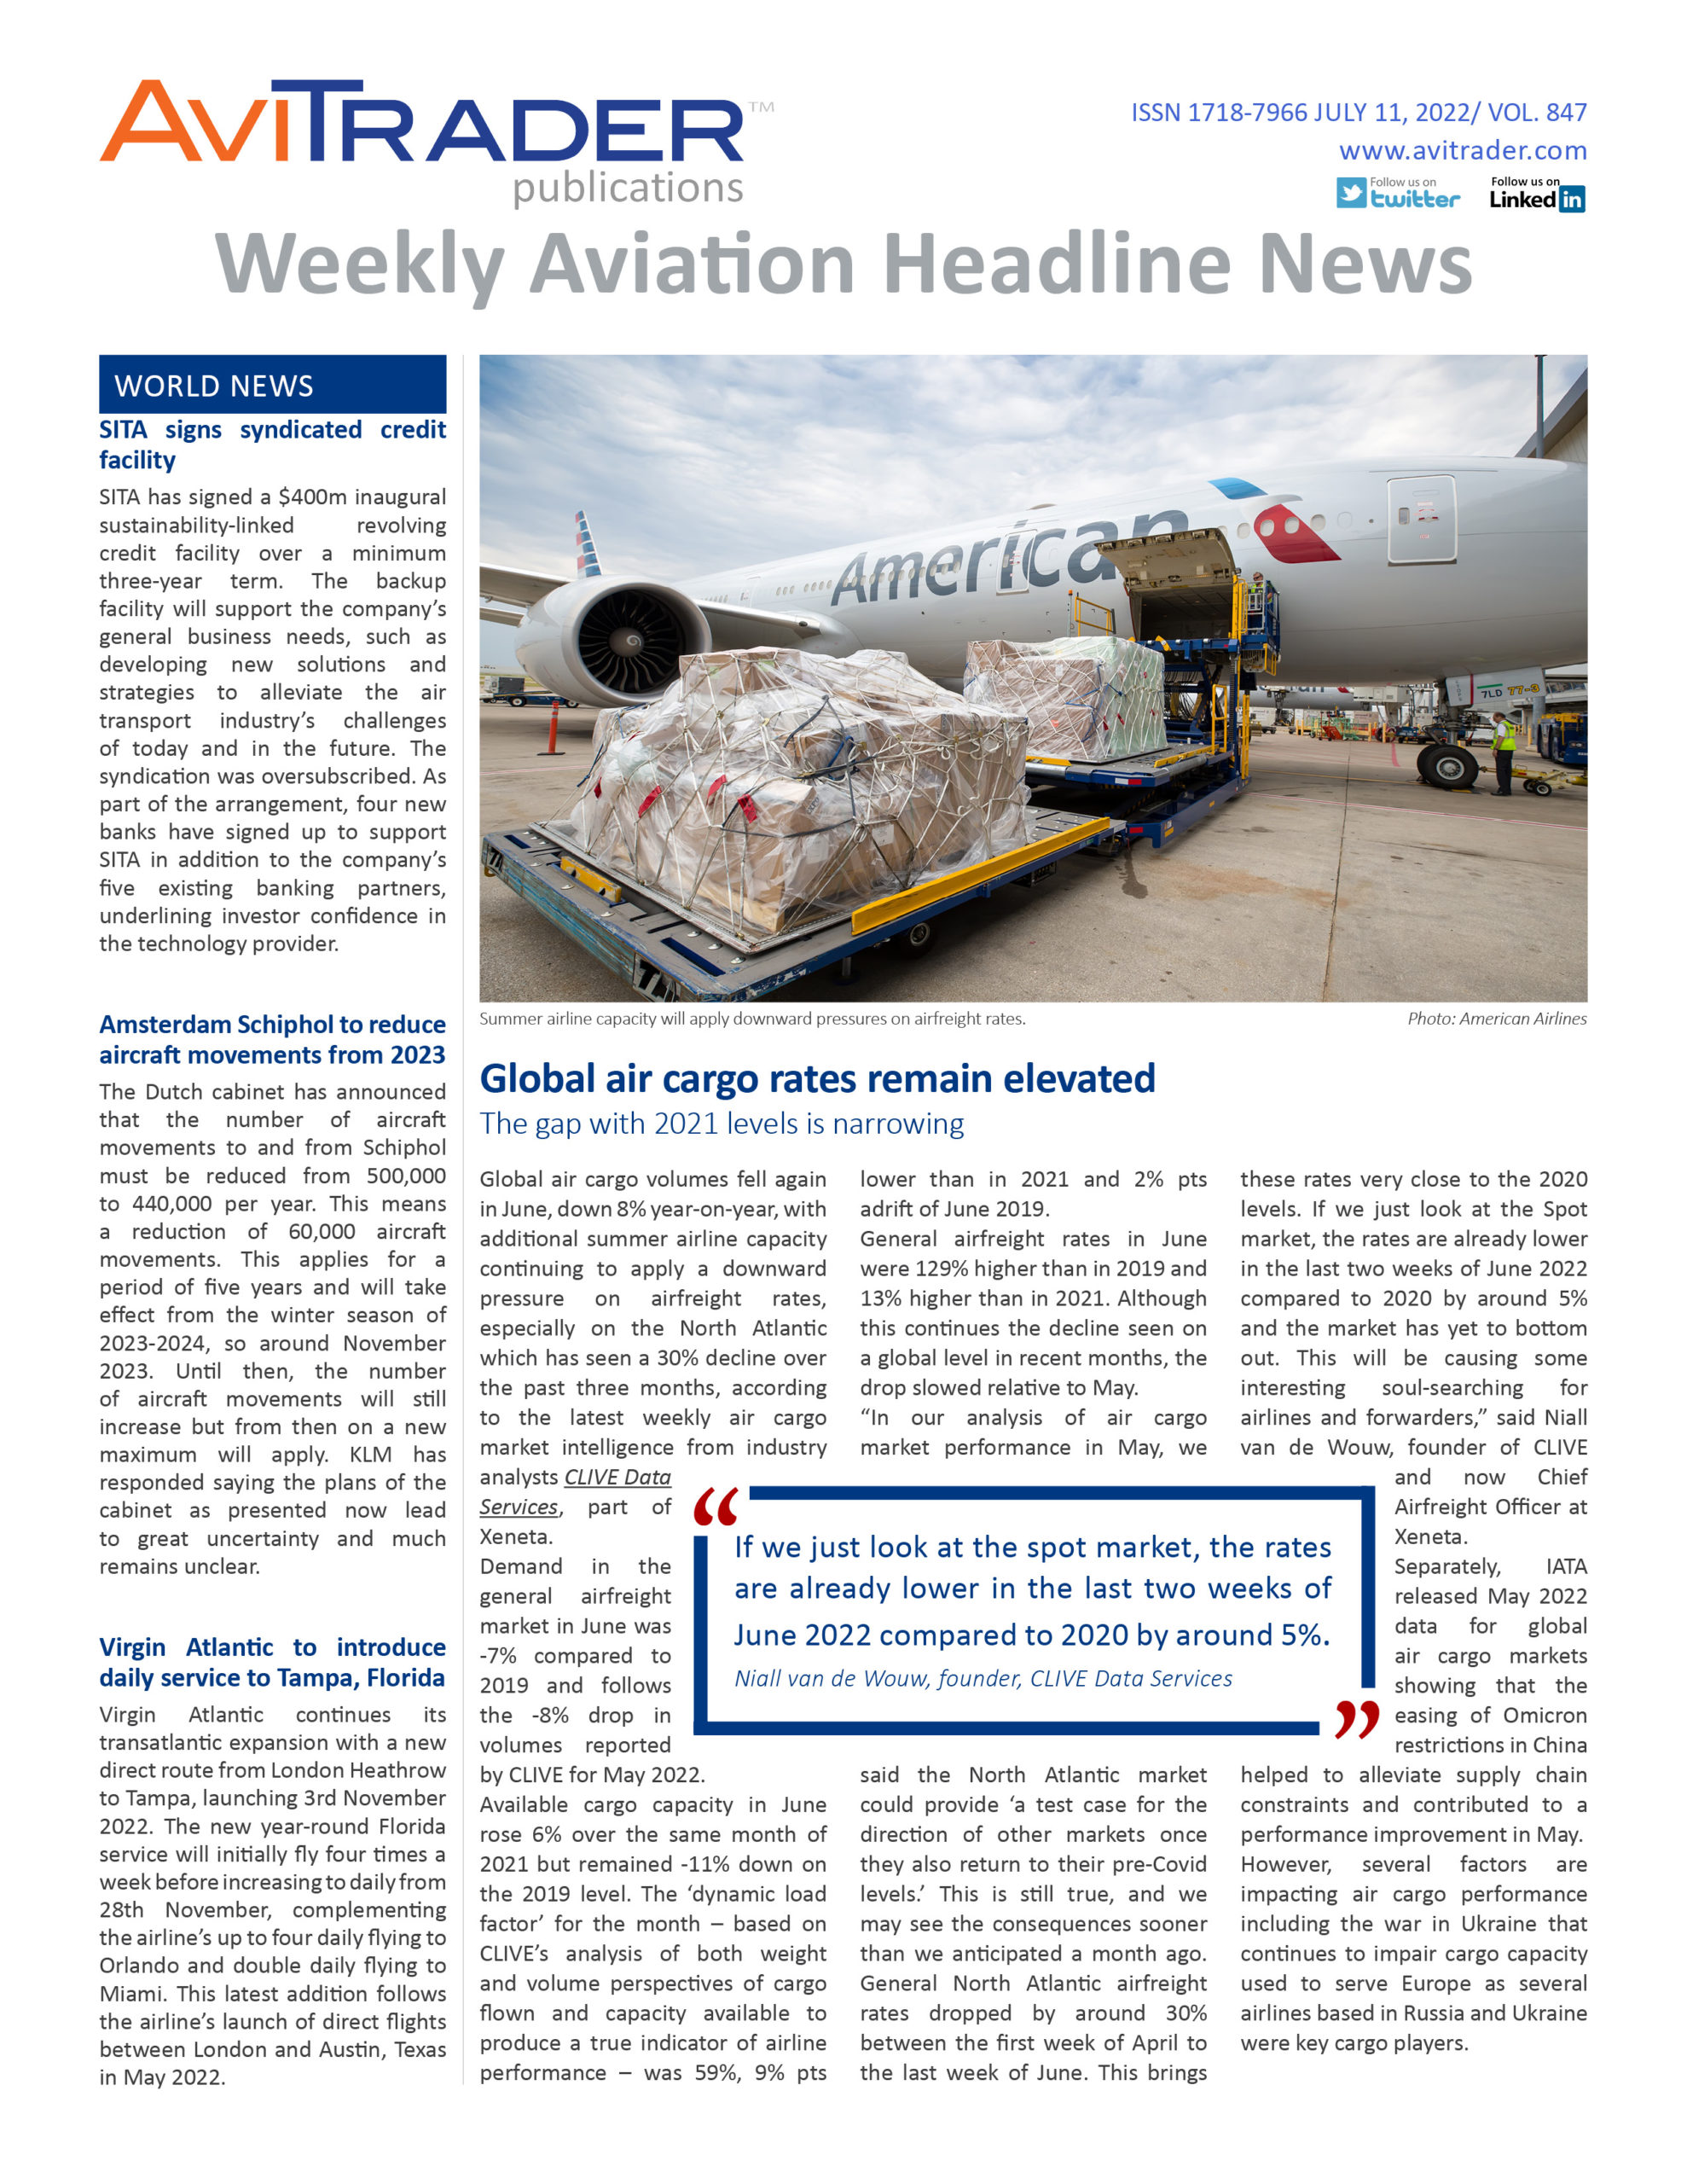 AviTrader_Weekly_Headline_News_Cover_2022-07-11